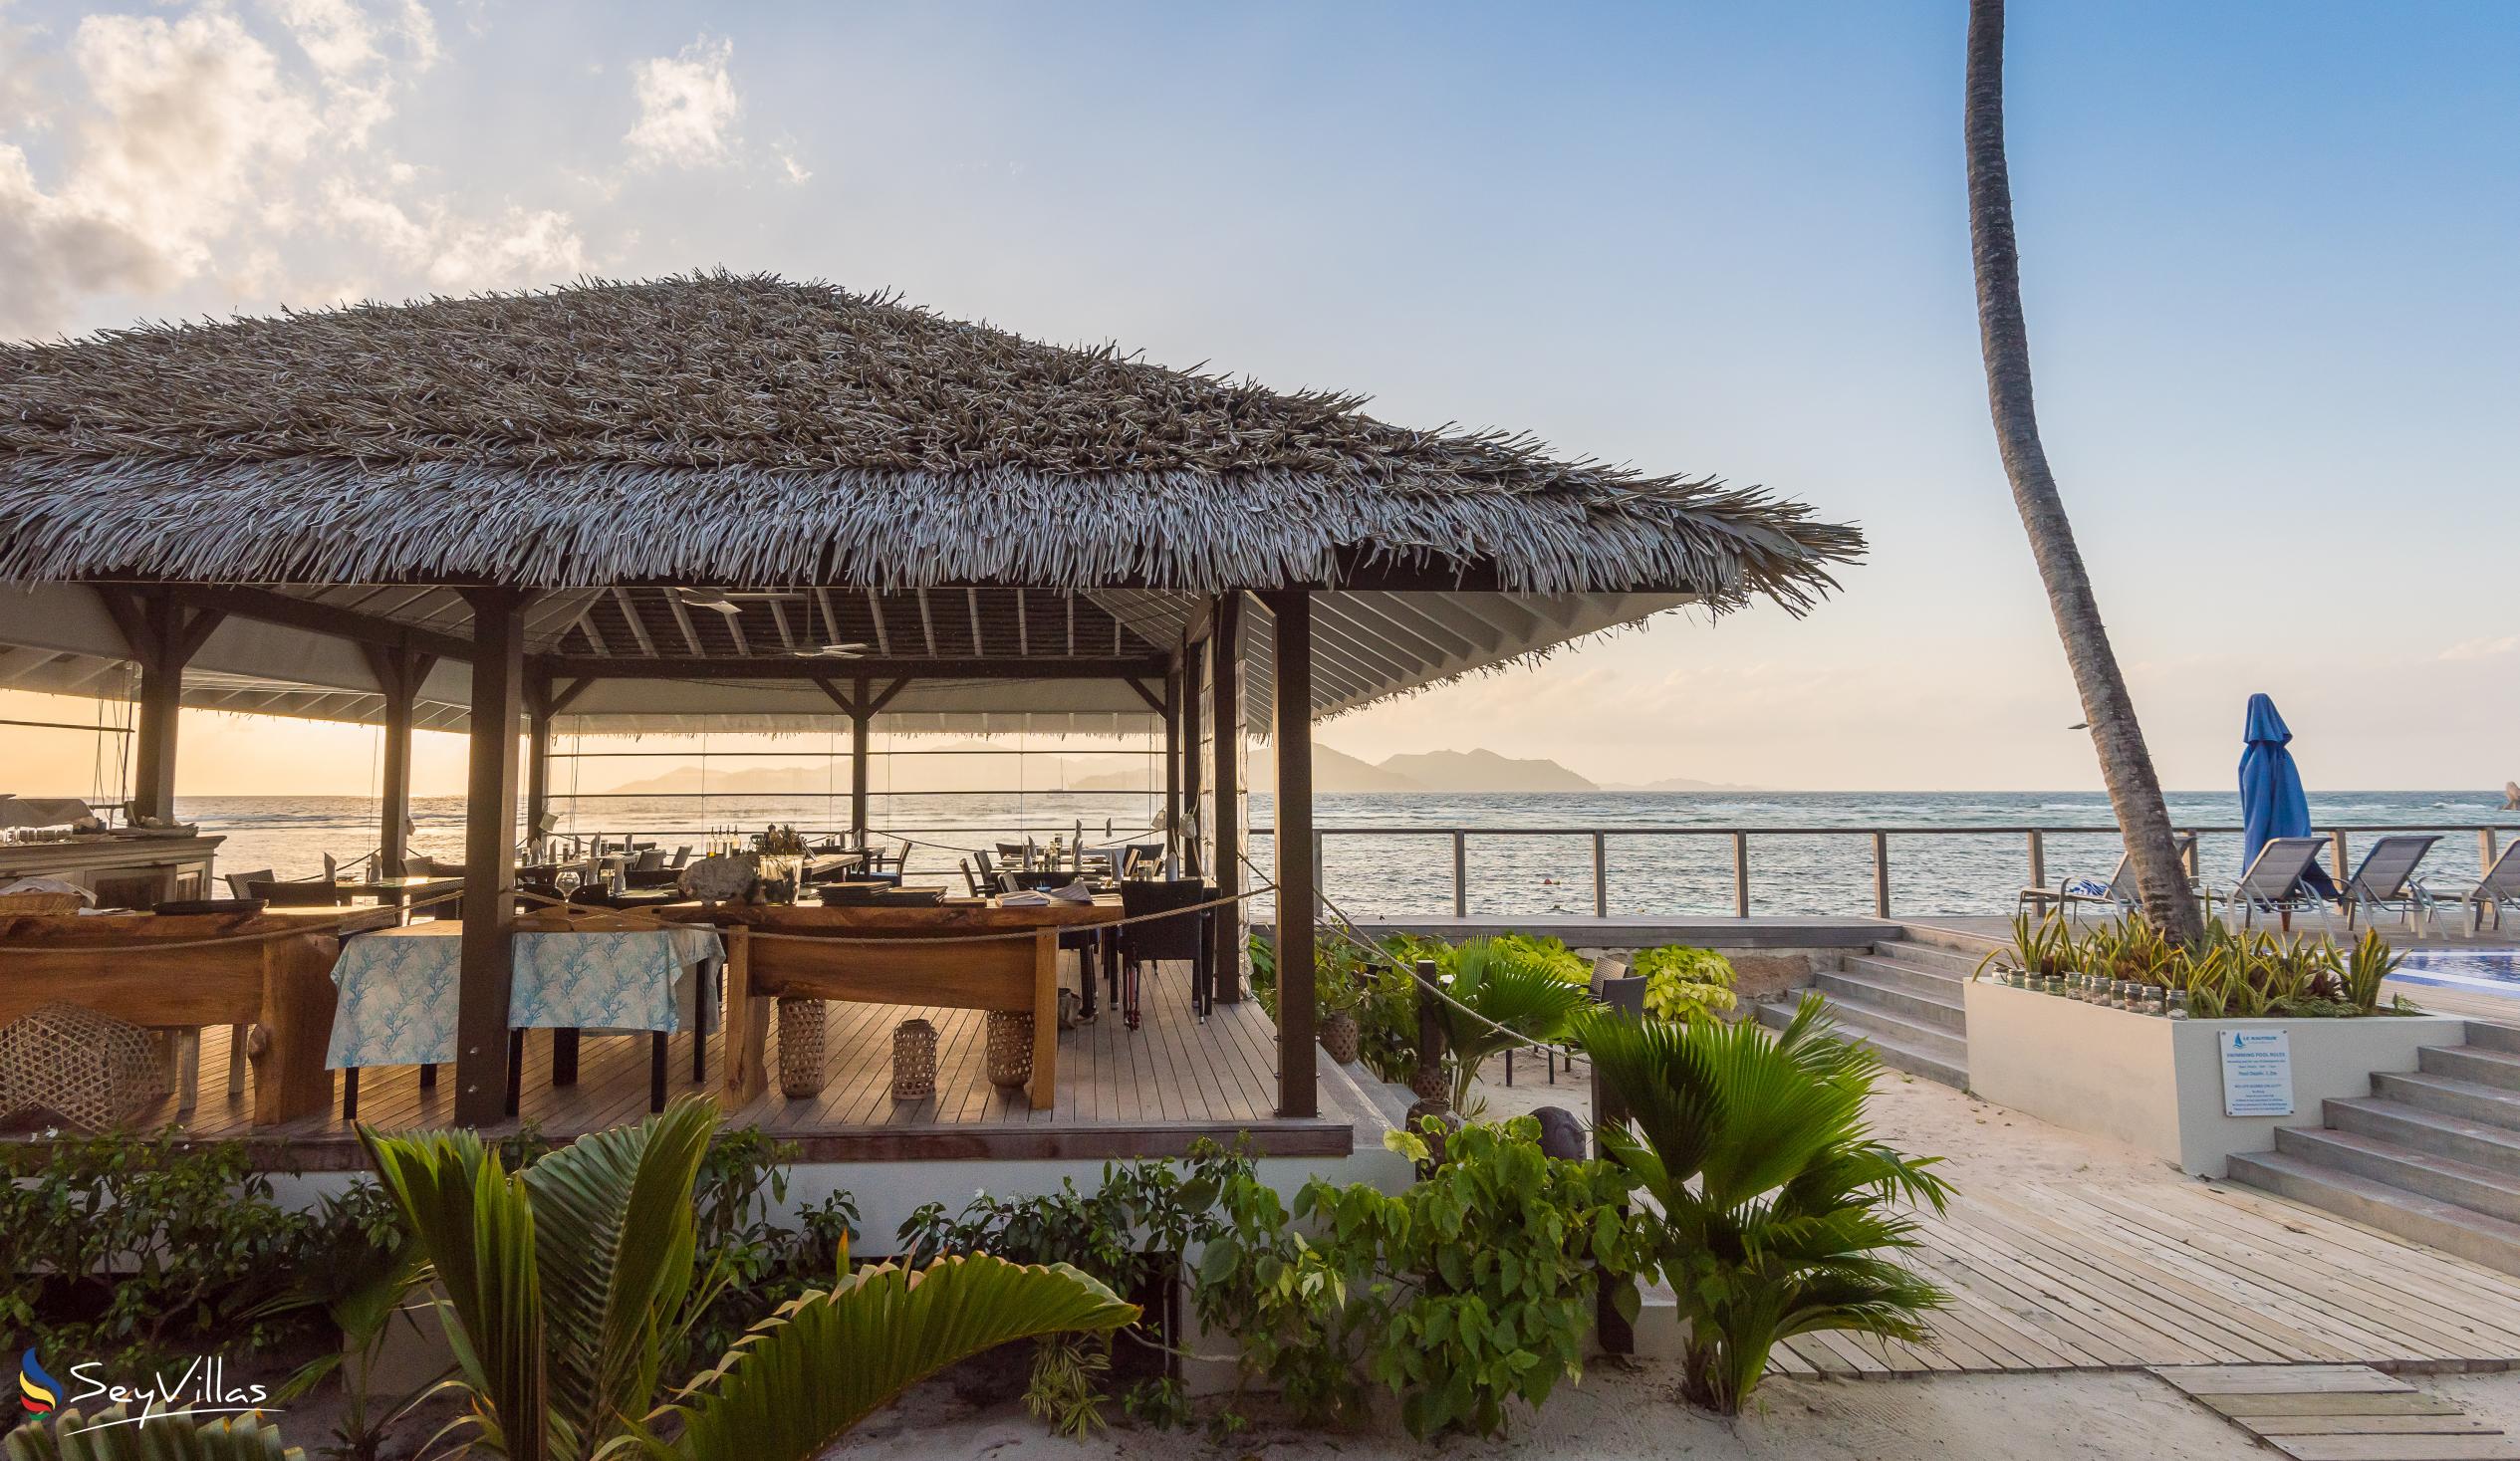 Foto 40: Le Nautique Luxury Waterfront Hotel - Innenbereich - La Digue (Seychellen)